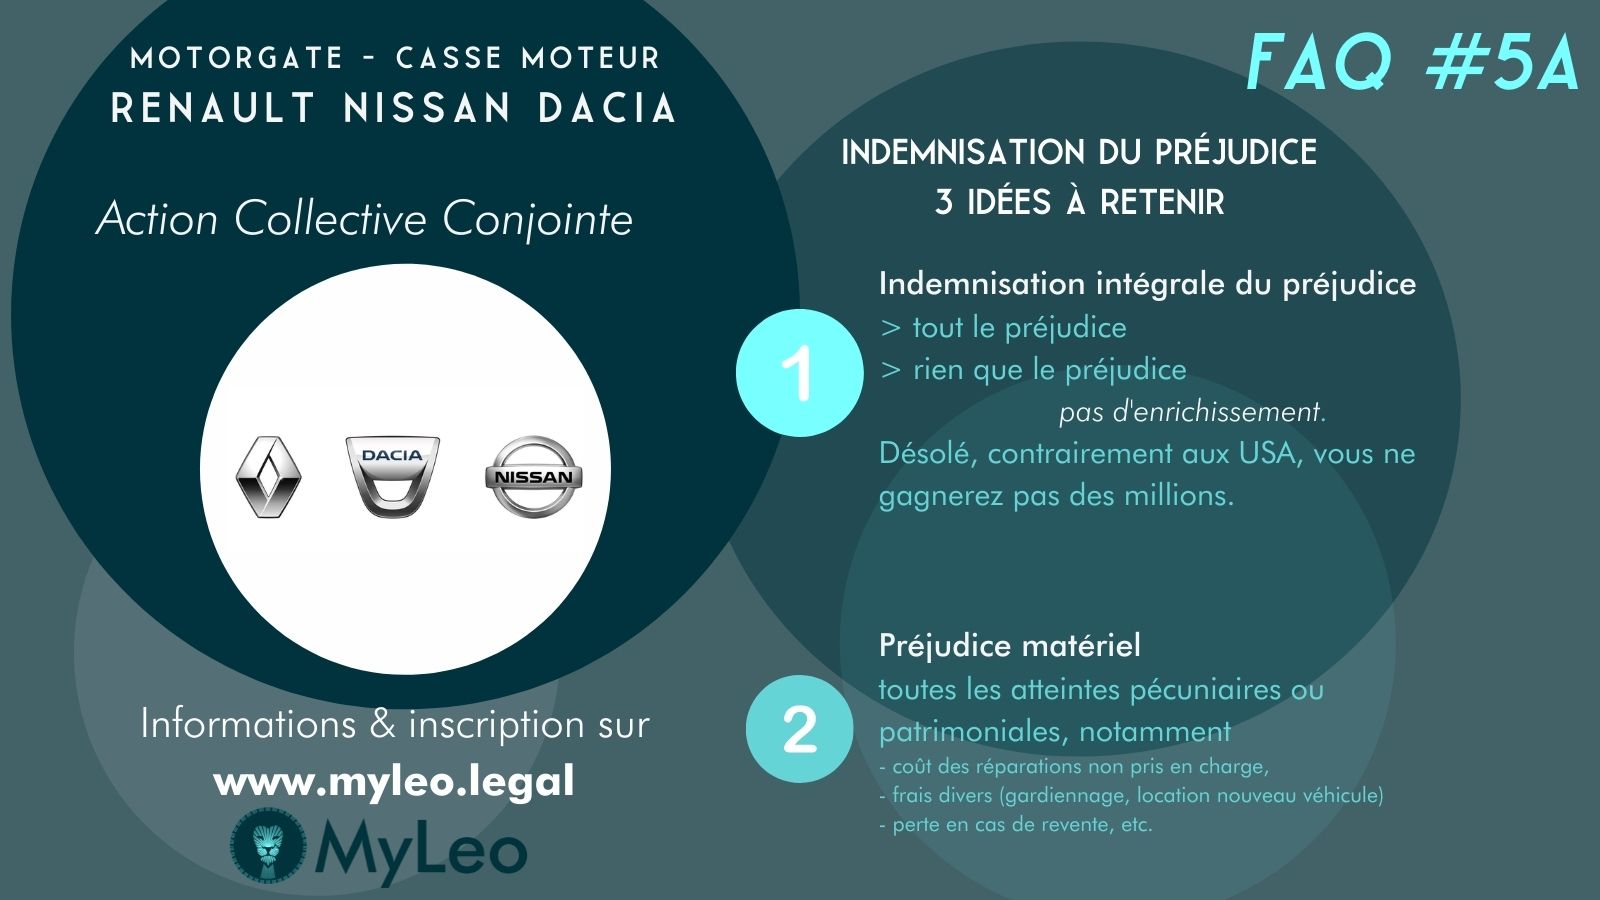 MOTORGATE - Renault - Nissan - Dacia - Casse-moteur, FAQ #5